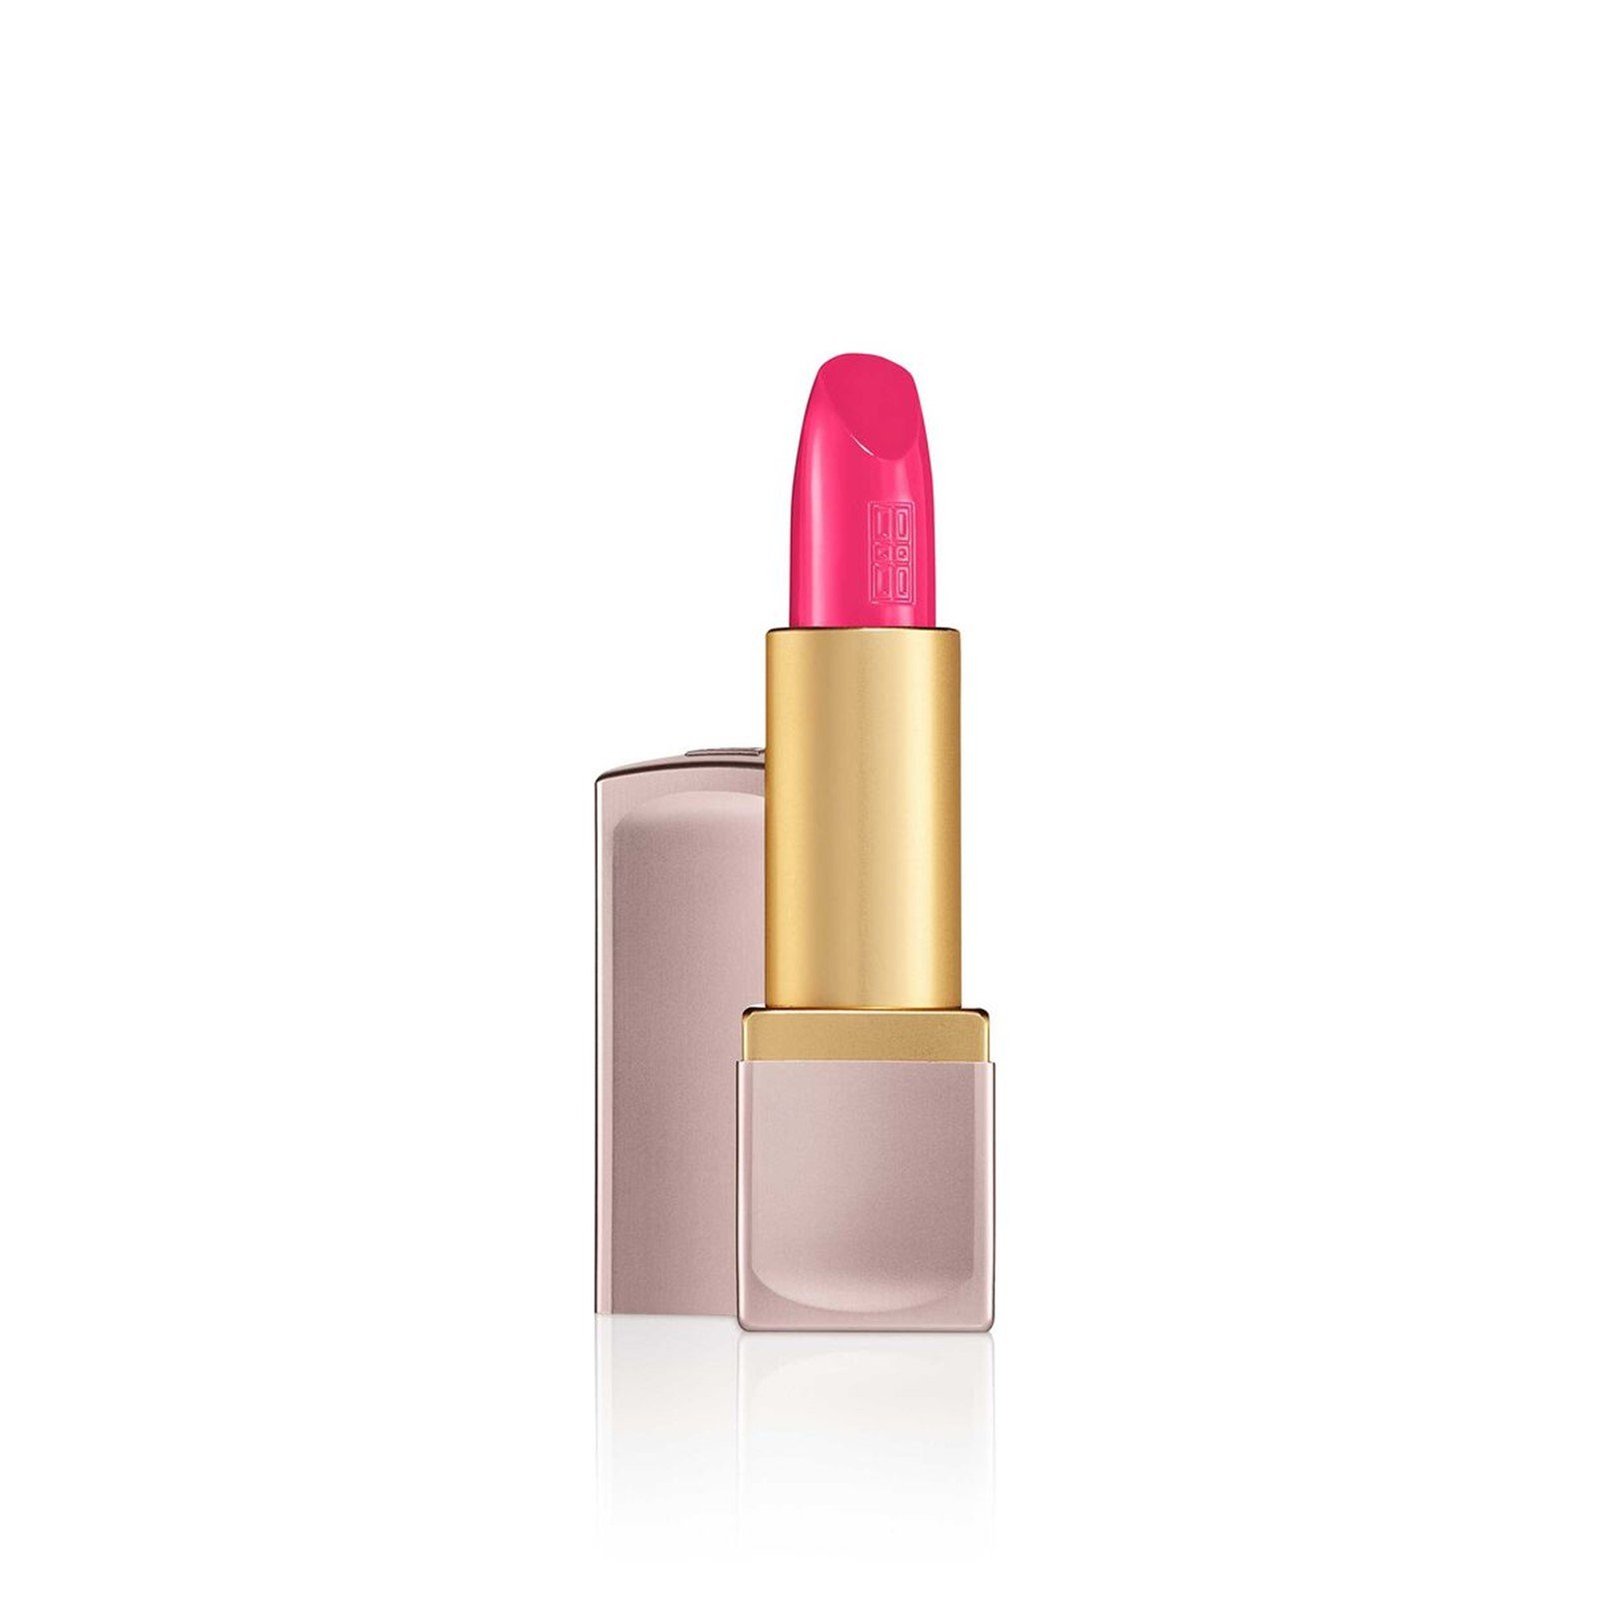 Elizabeth Arden Lip Color Lipstick 04 Persistent Pink 4g (0.14 oz)